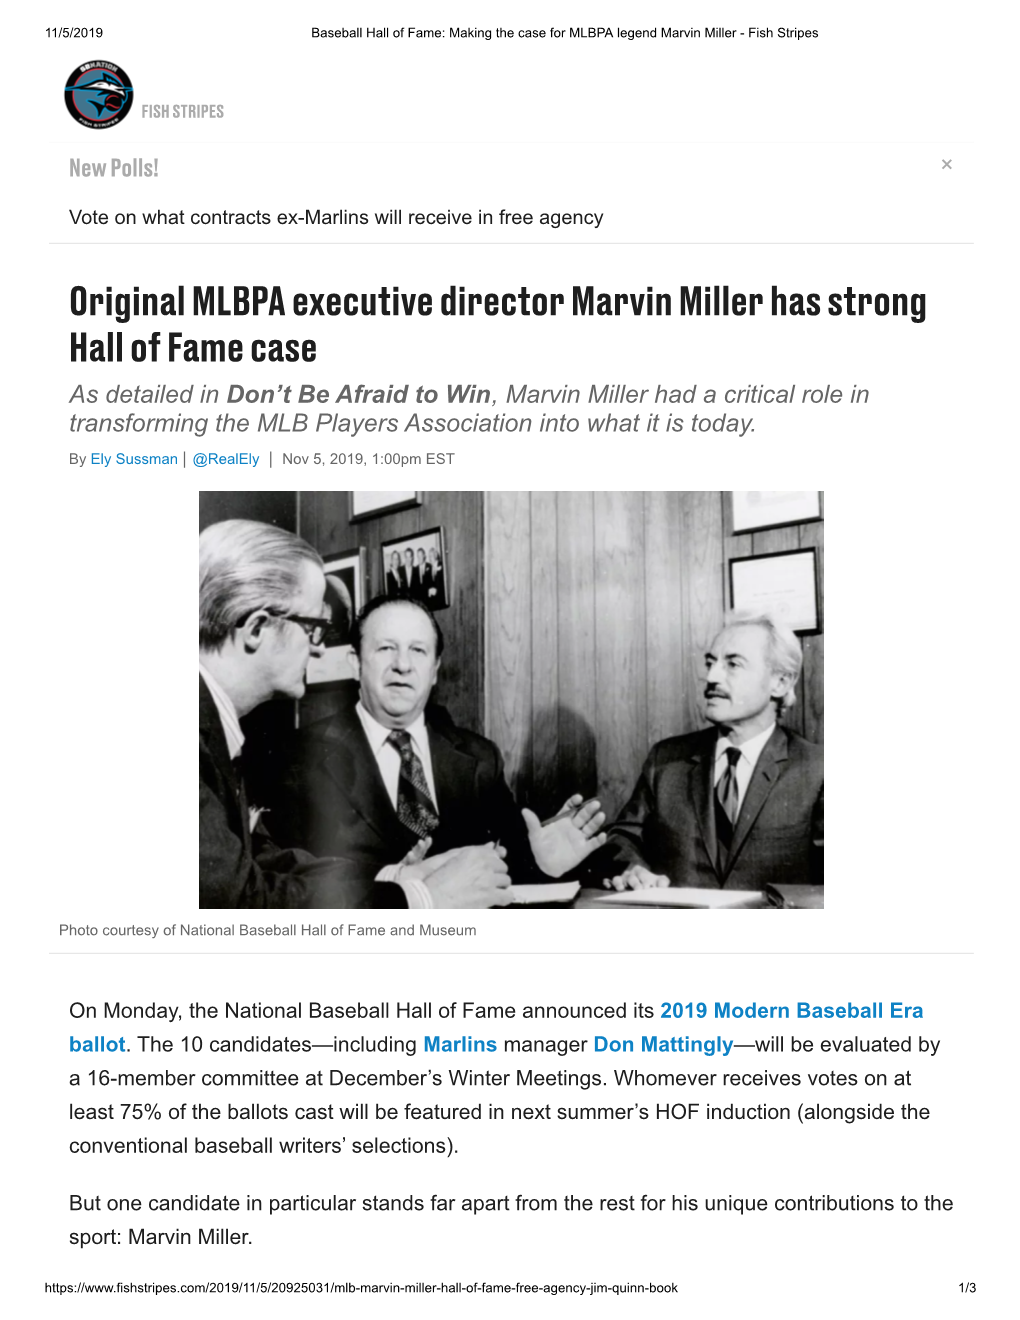 Original MLBPA Executive Director Marvin Miller Has Strong Hall Of